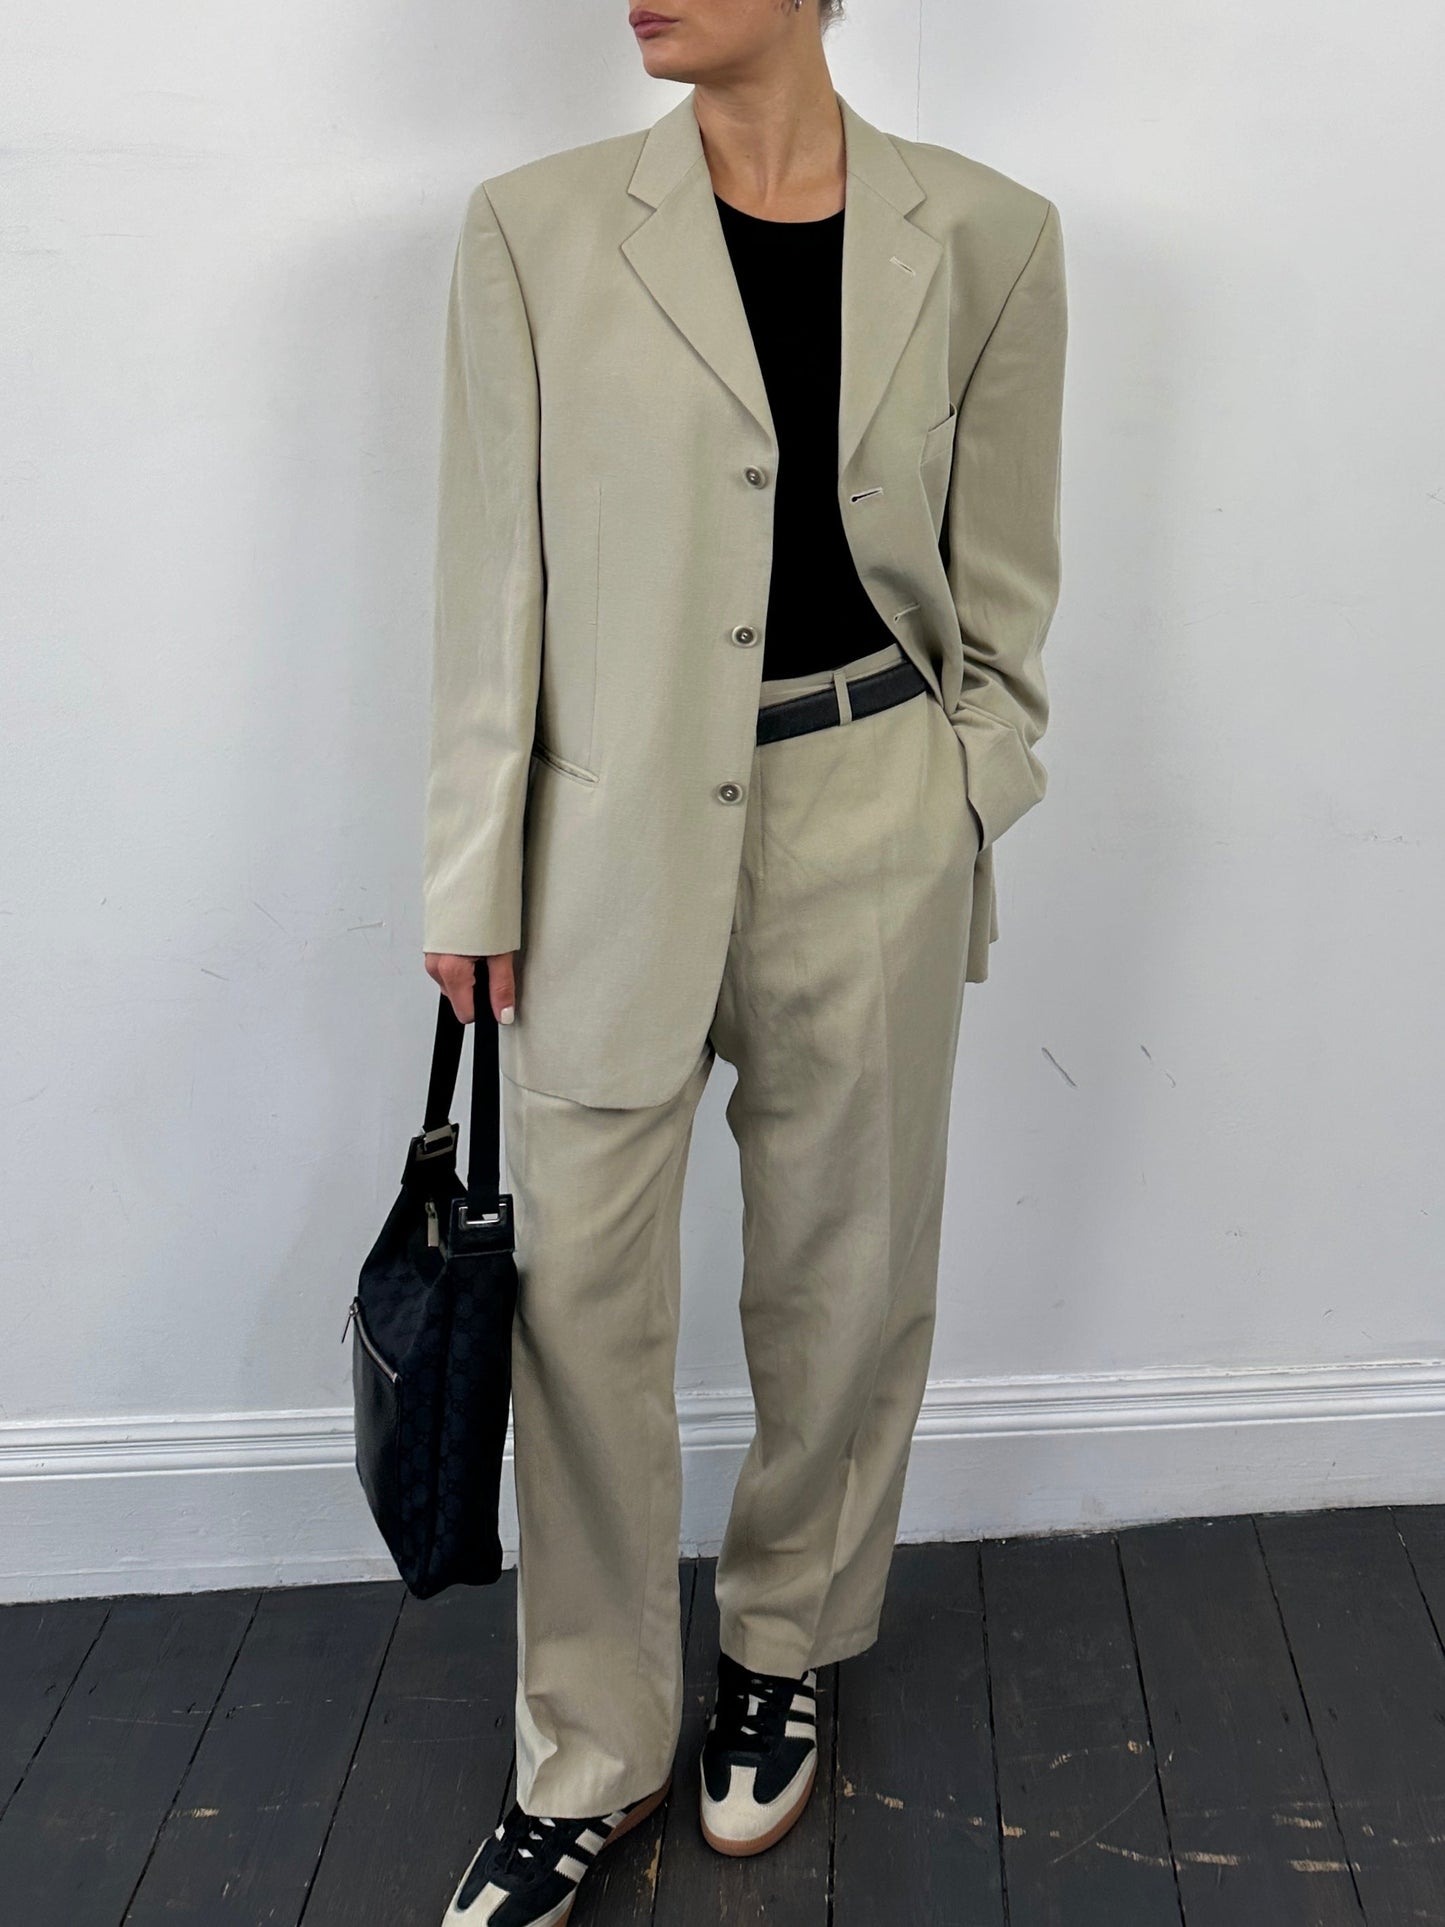 Vintage Linen Blend Single Breasted Suit - 42R/W34